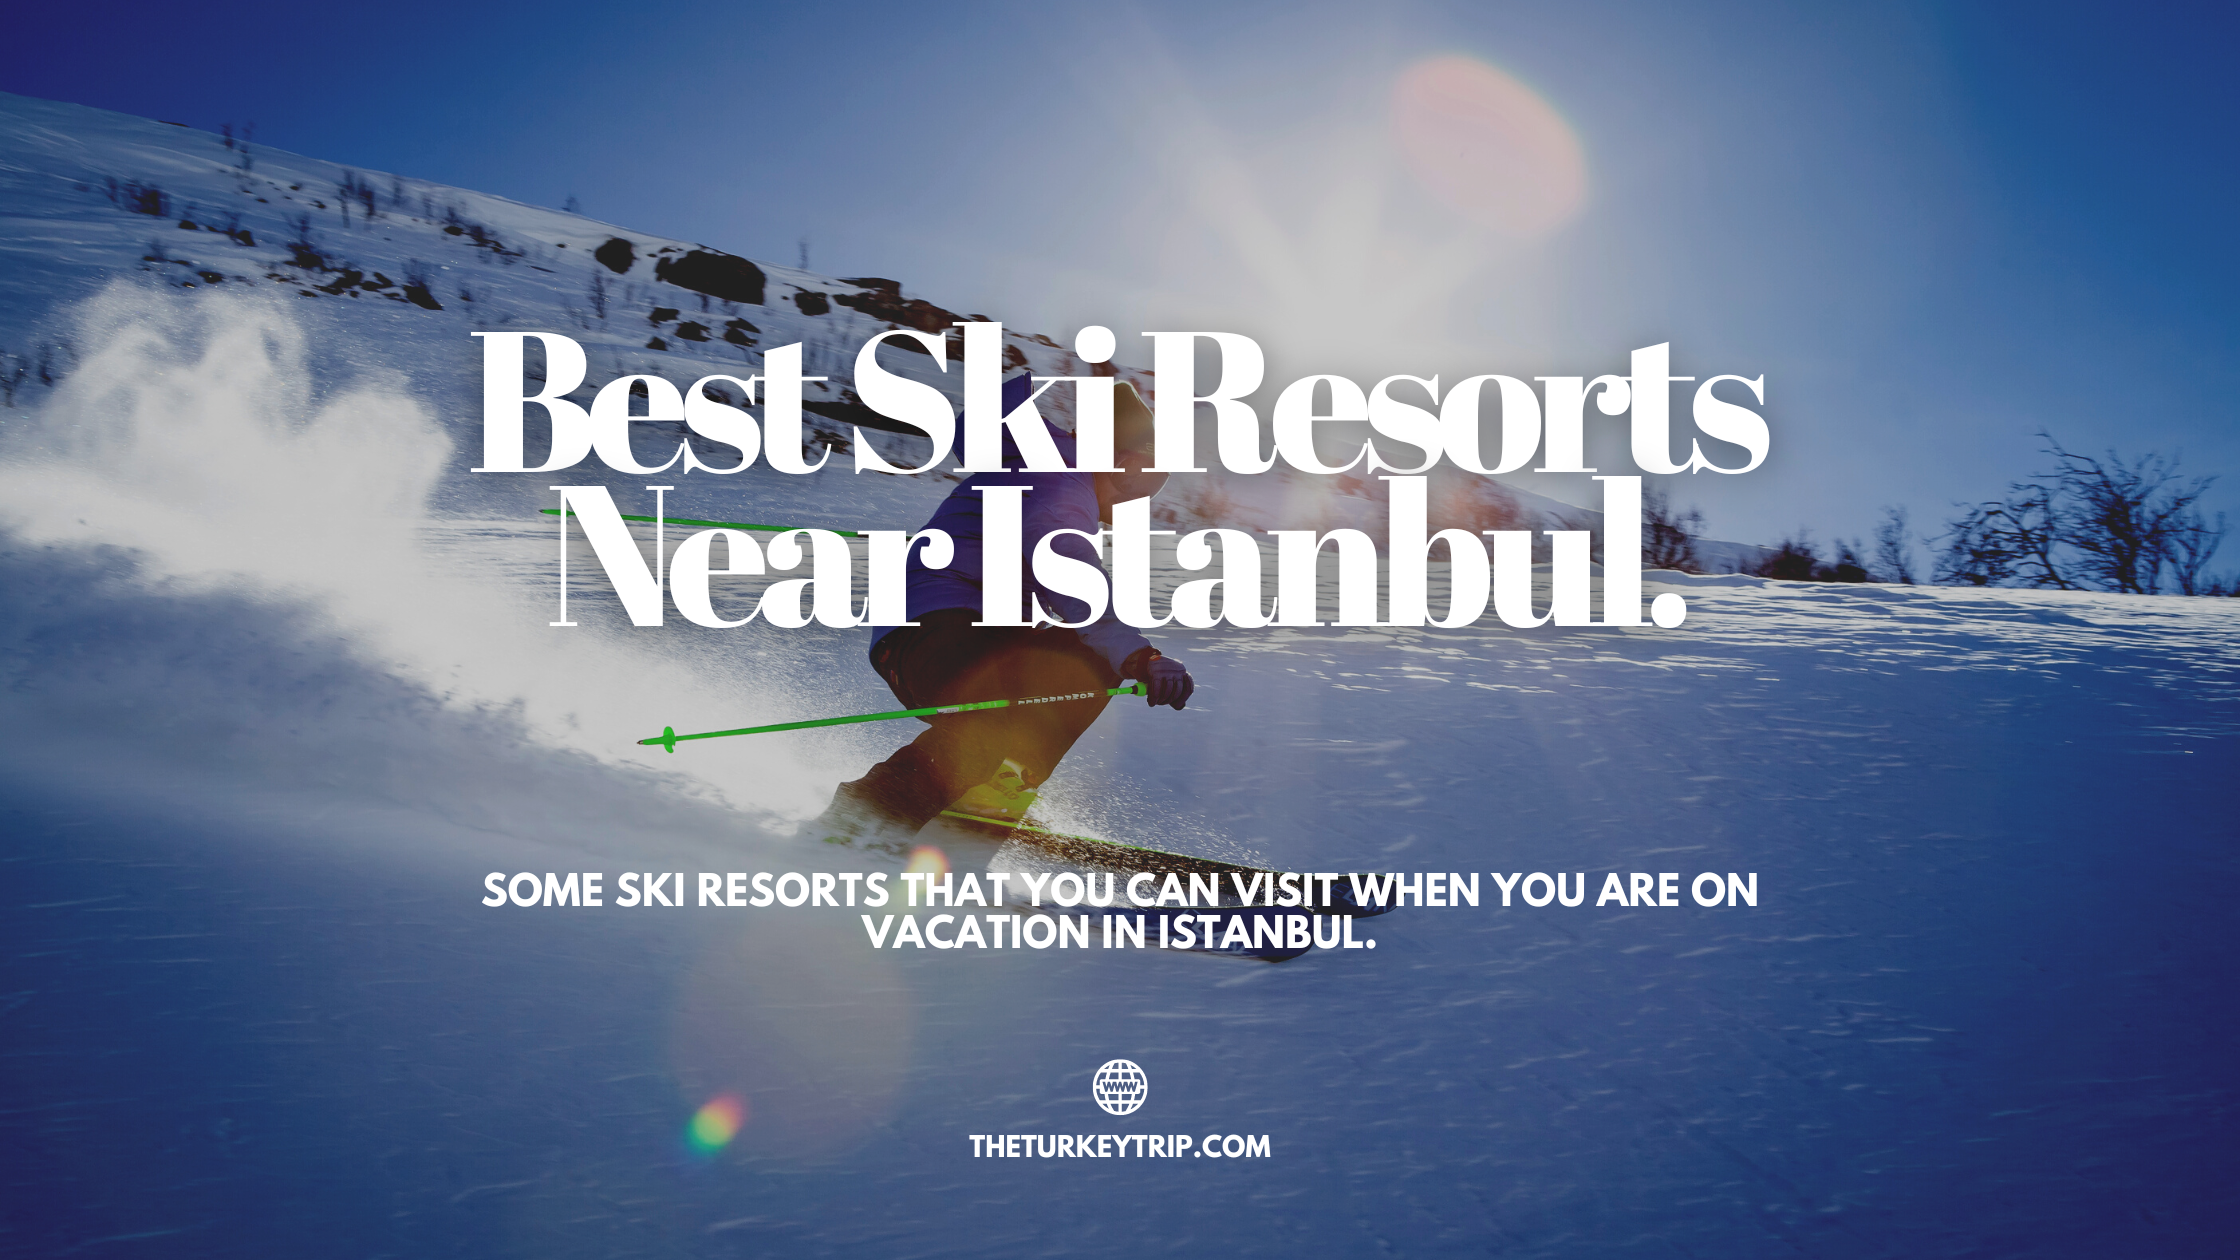 ski resorts near istanbul turkey